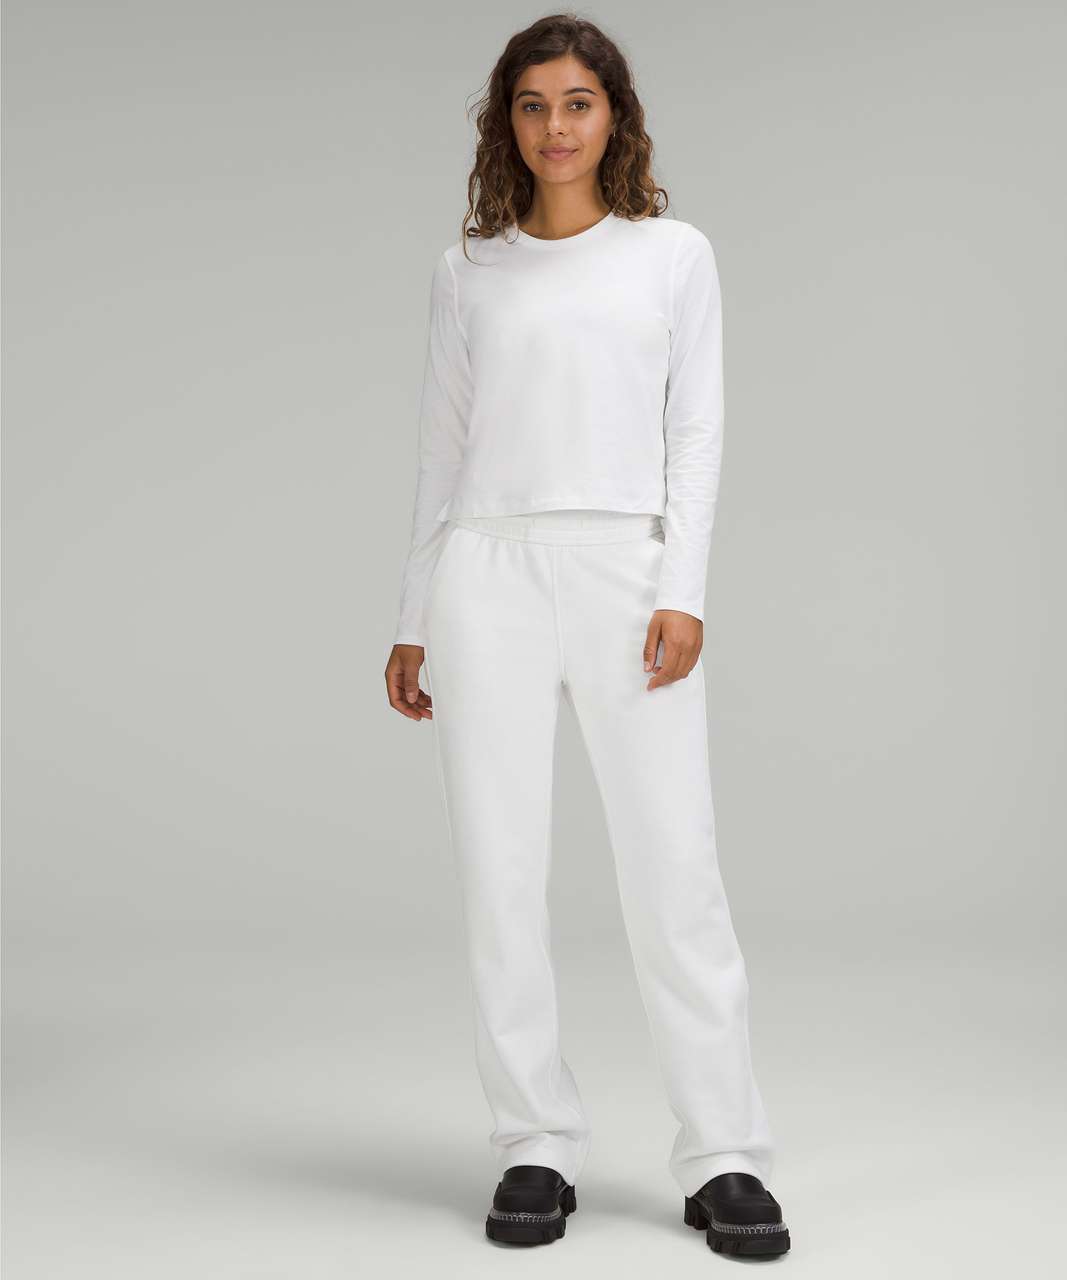 Lululemon Classic-Fit Cotton-Blend Long Sleeve Shirt - White